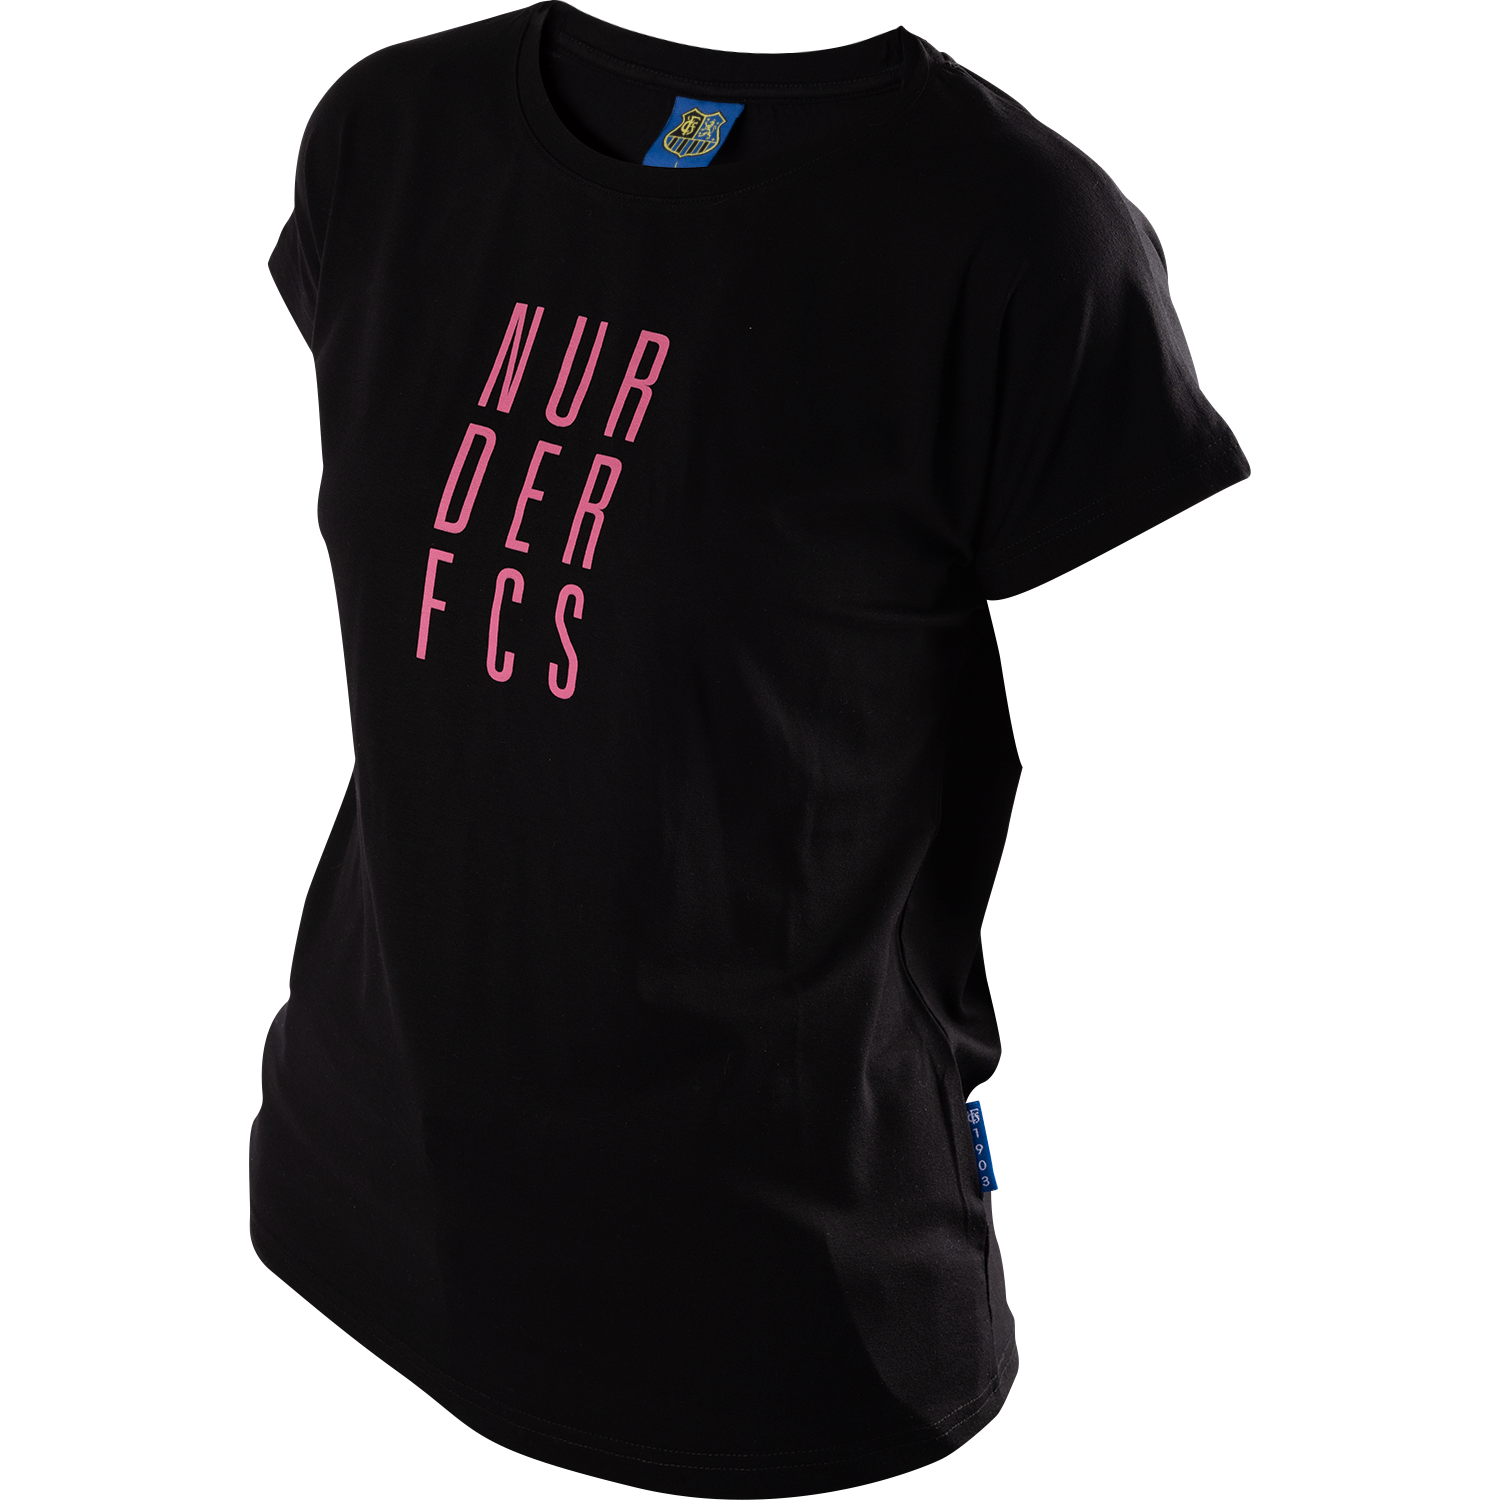 FCS-T-Shirt NURDERFCS in pink